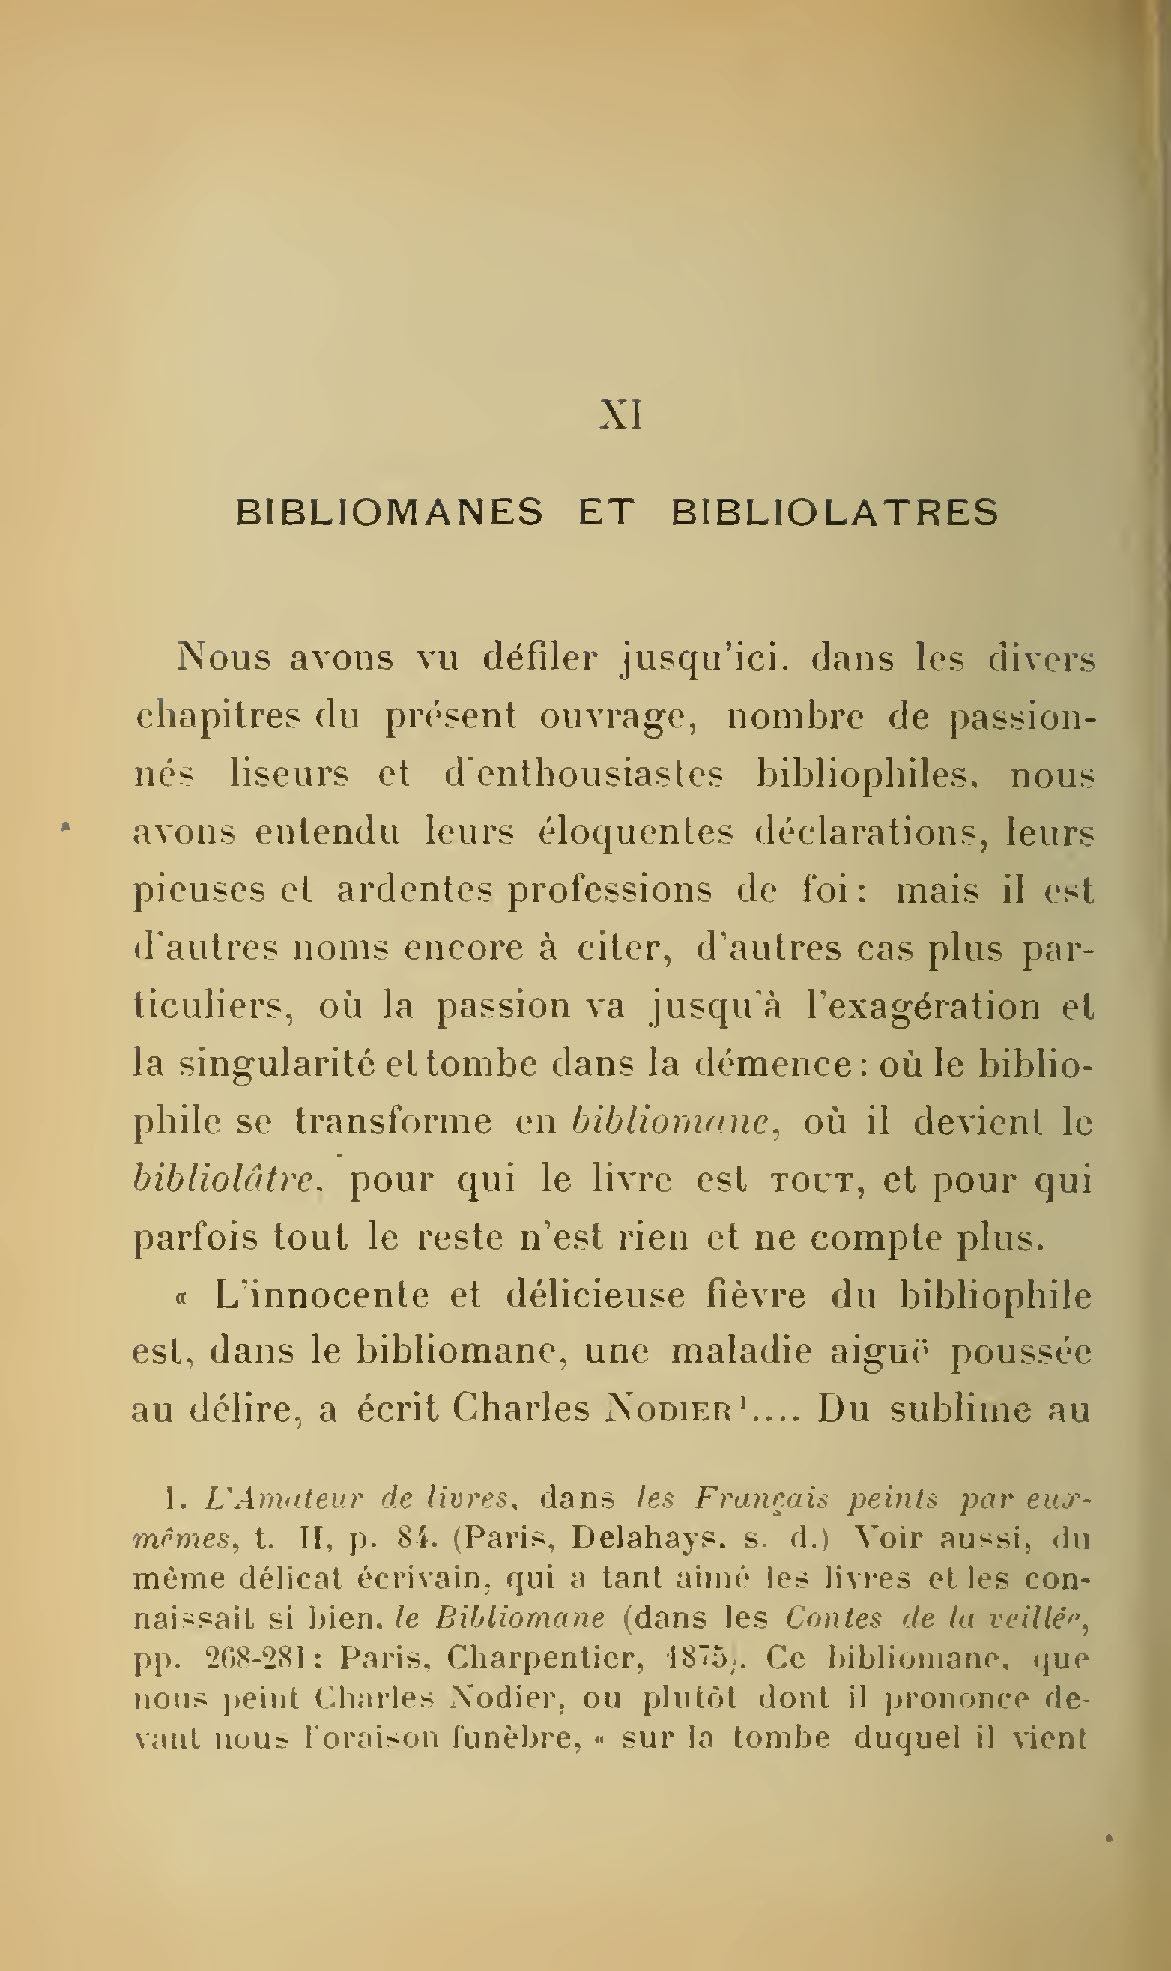 Albert Cim, Le Livre, t. II, p. 216.